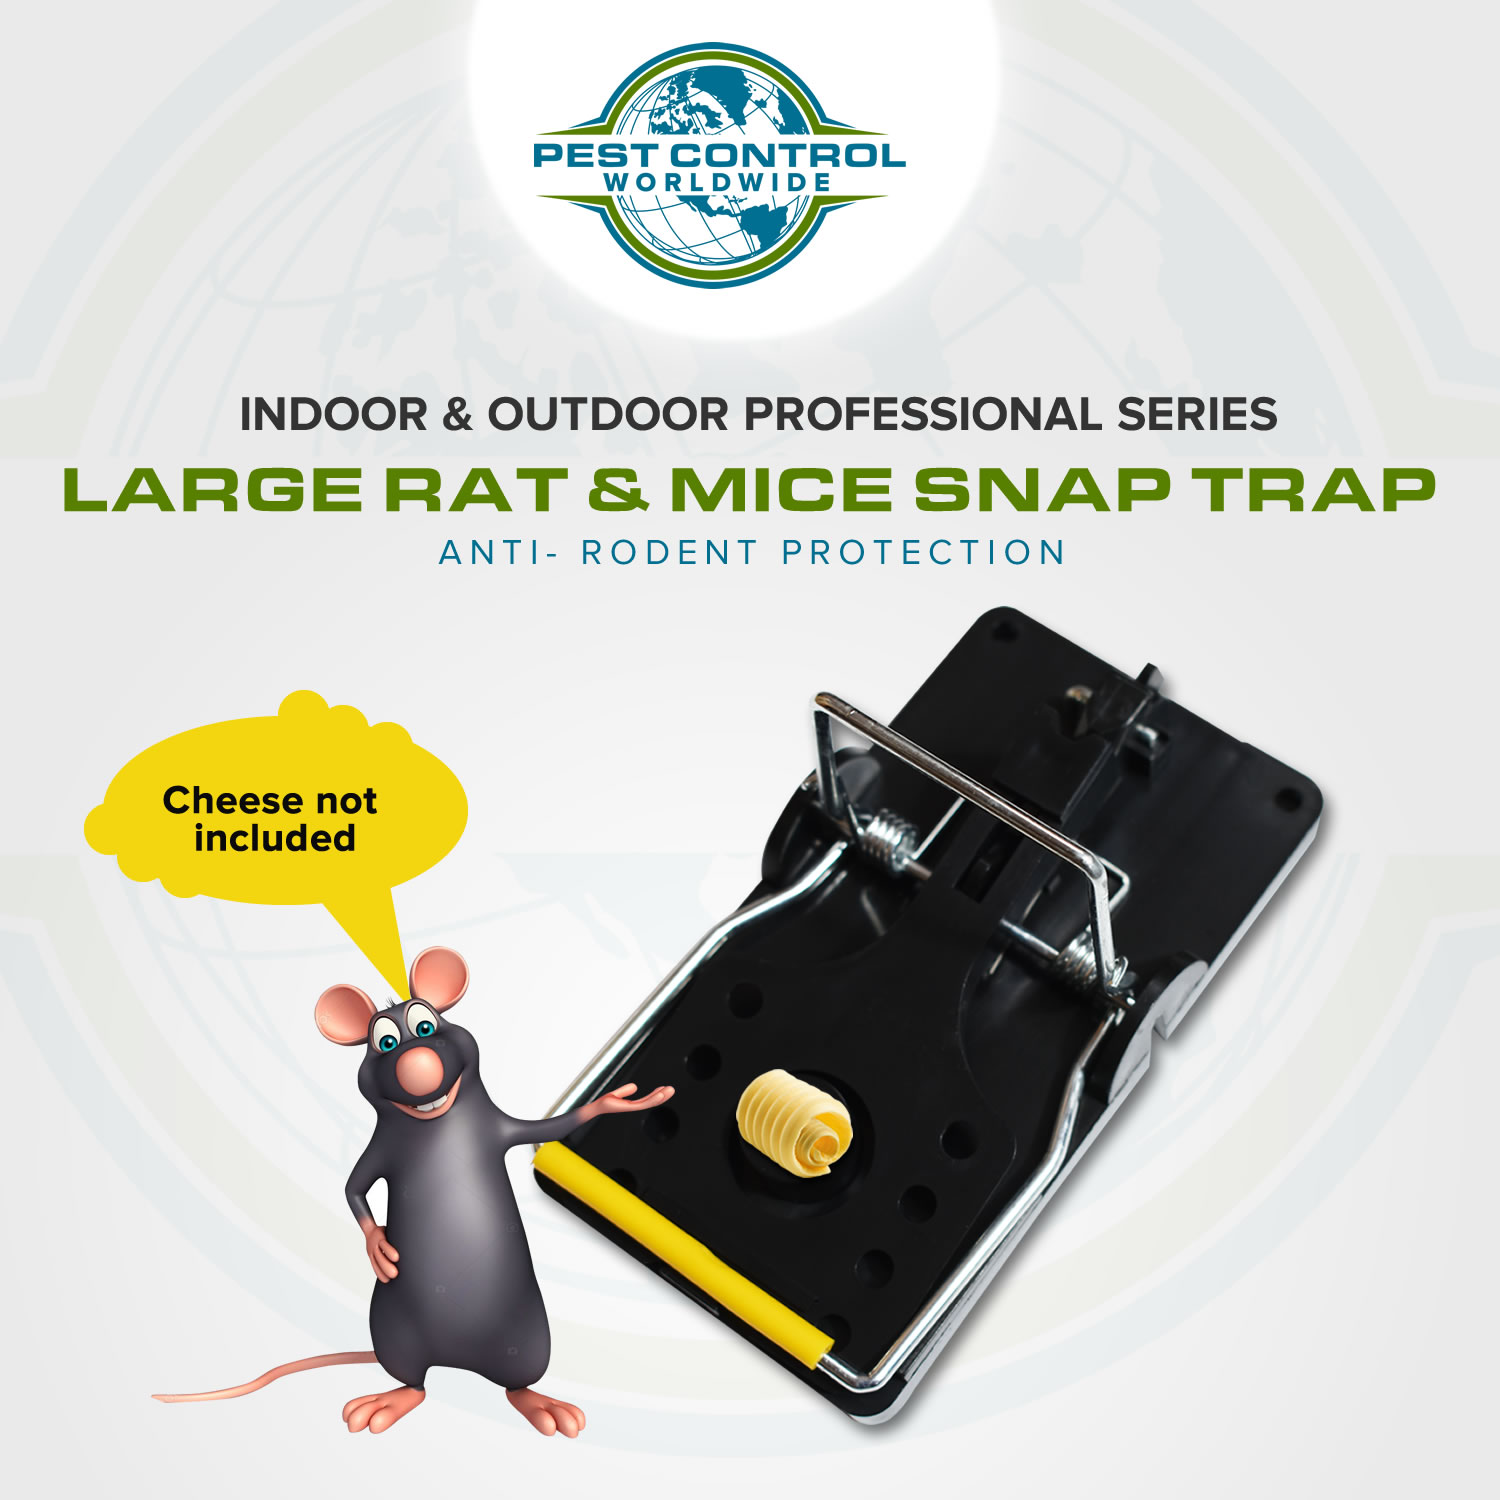 https://pestcontrolworldwide.com/wp-content/webpc-passthru.php?src=https://pestcontrolworldwide.com/wp-content/uploads/2021/05/large-rat-_-mice-snap-trap_1_10-jun-2021_A_1.jpg&nocache=1